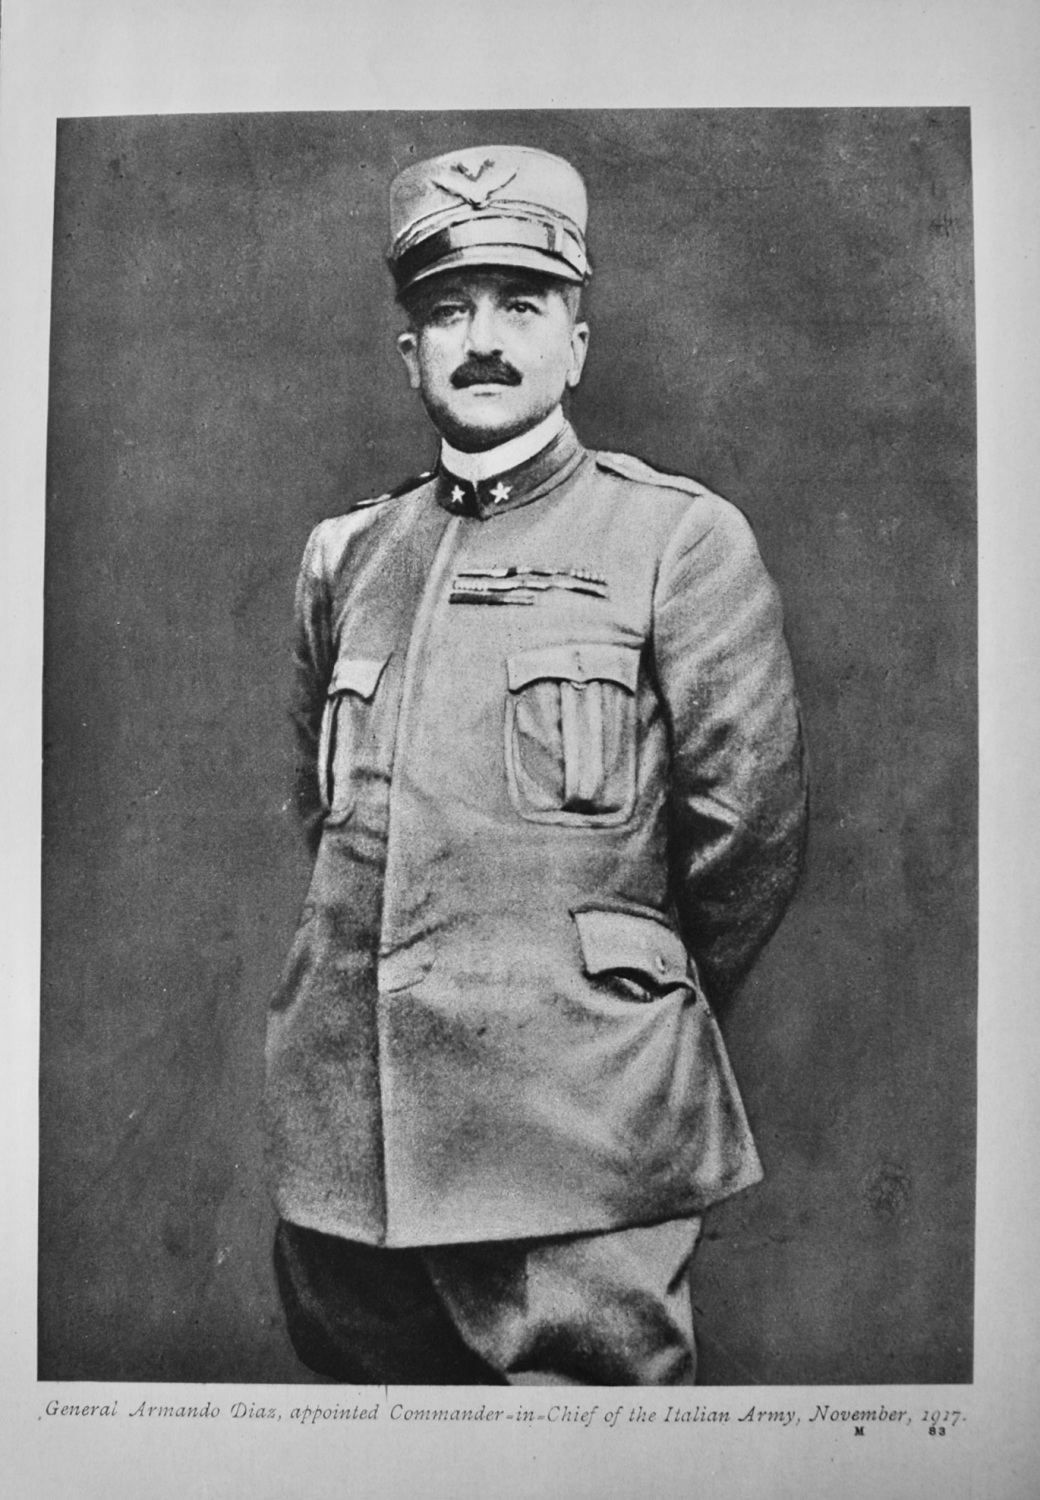 General Armando Dias, appointed Commander-in-Chief of the Italian Army, Nov